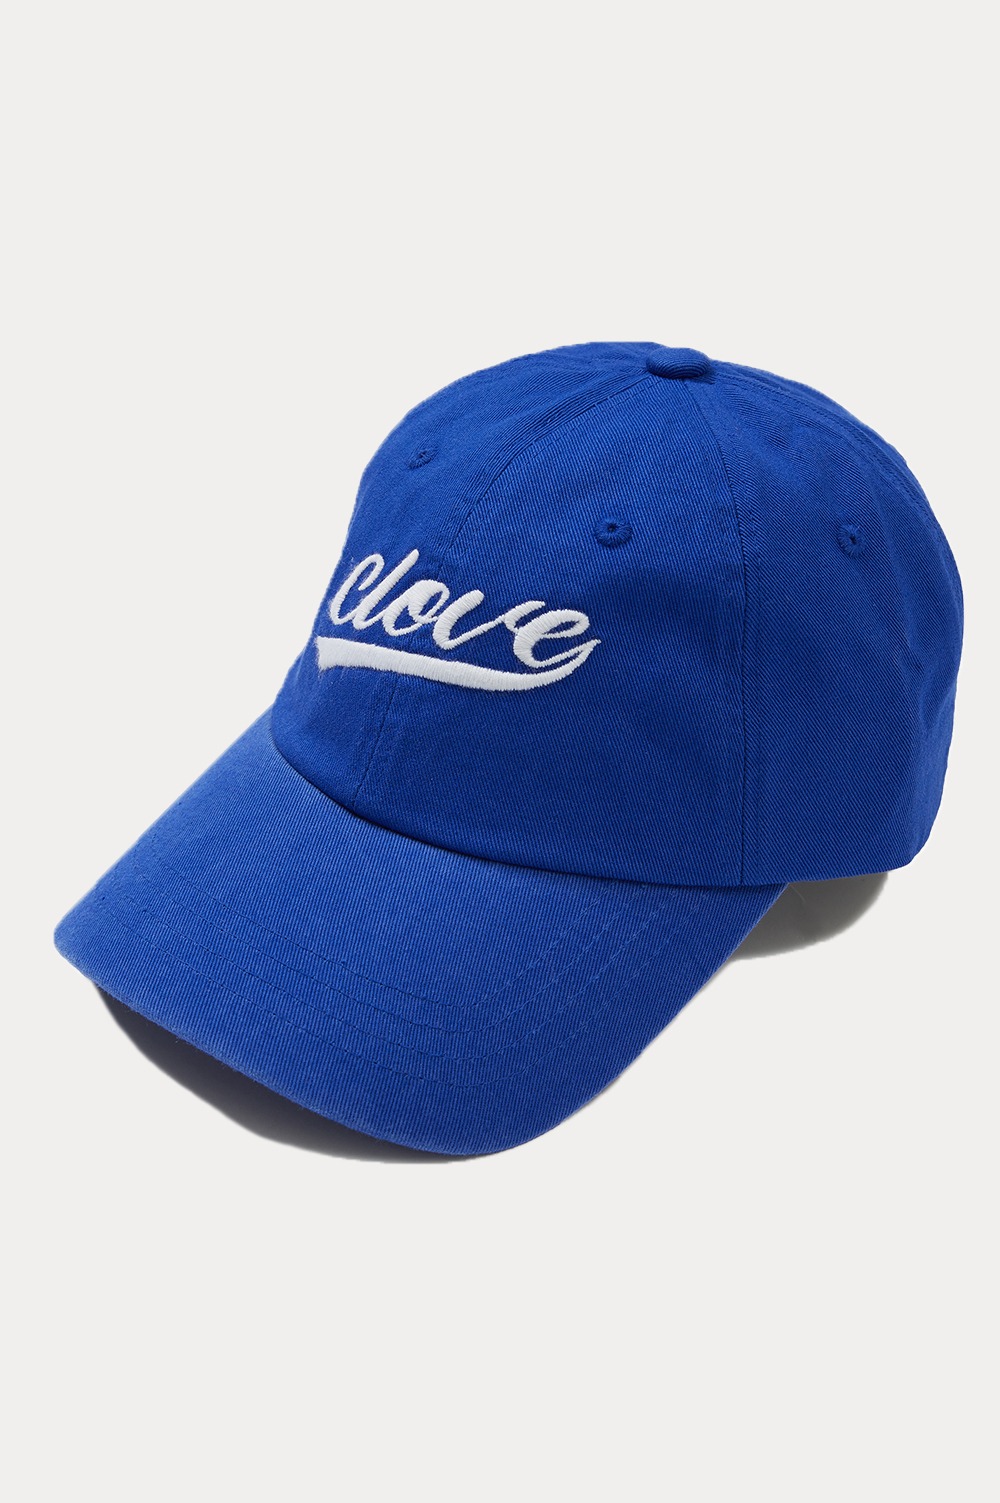 clove - Classic Logo Baseball Cap (Paris Blue)